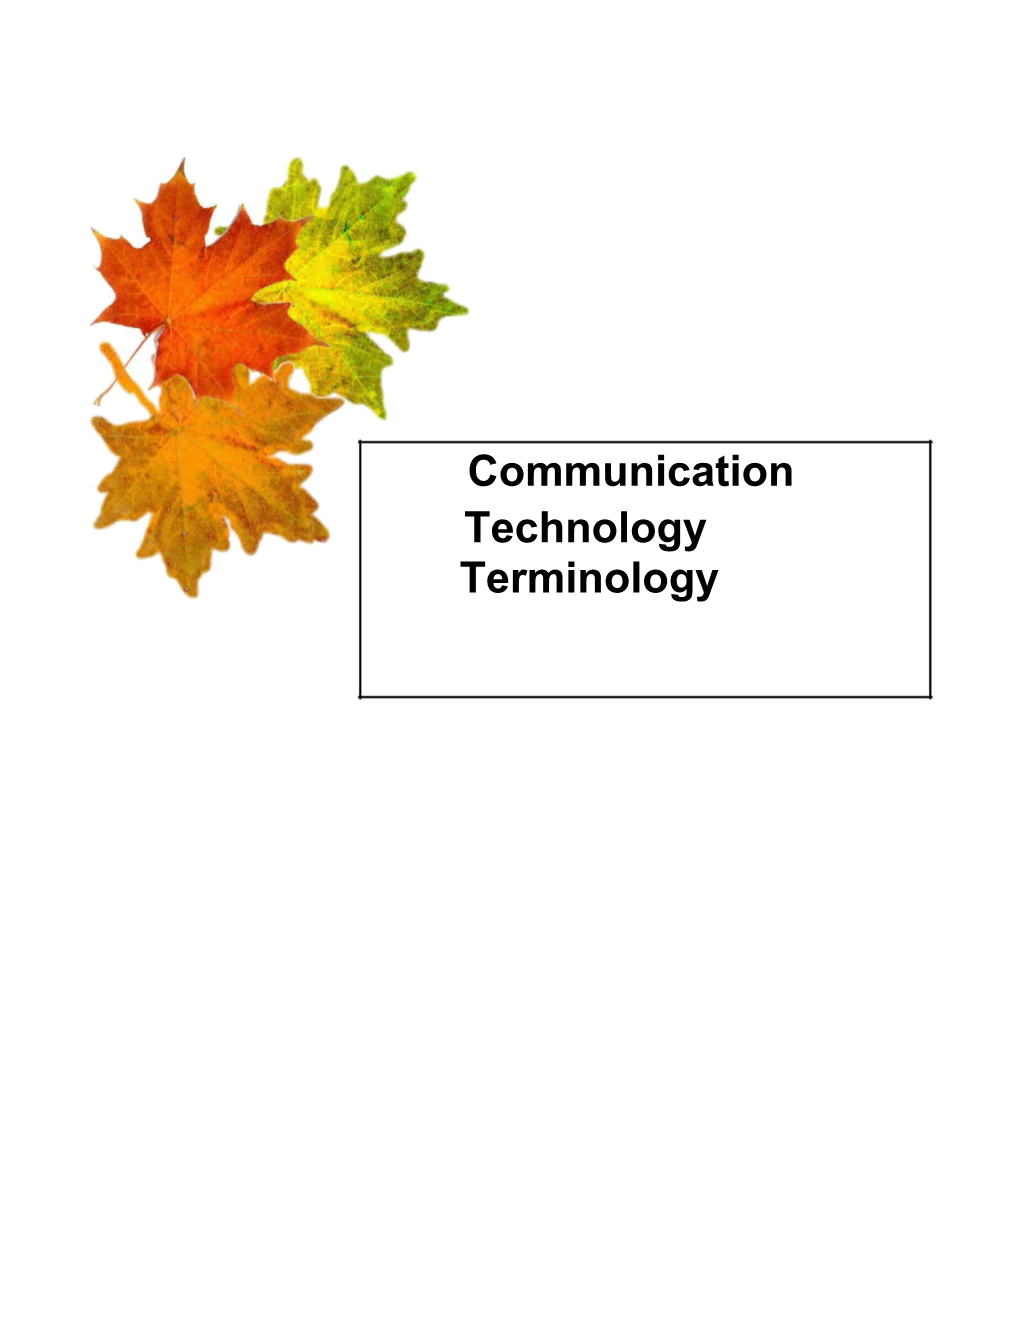 Basic Information Technology Terminology Part 1 6